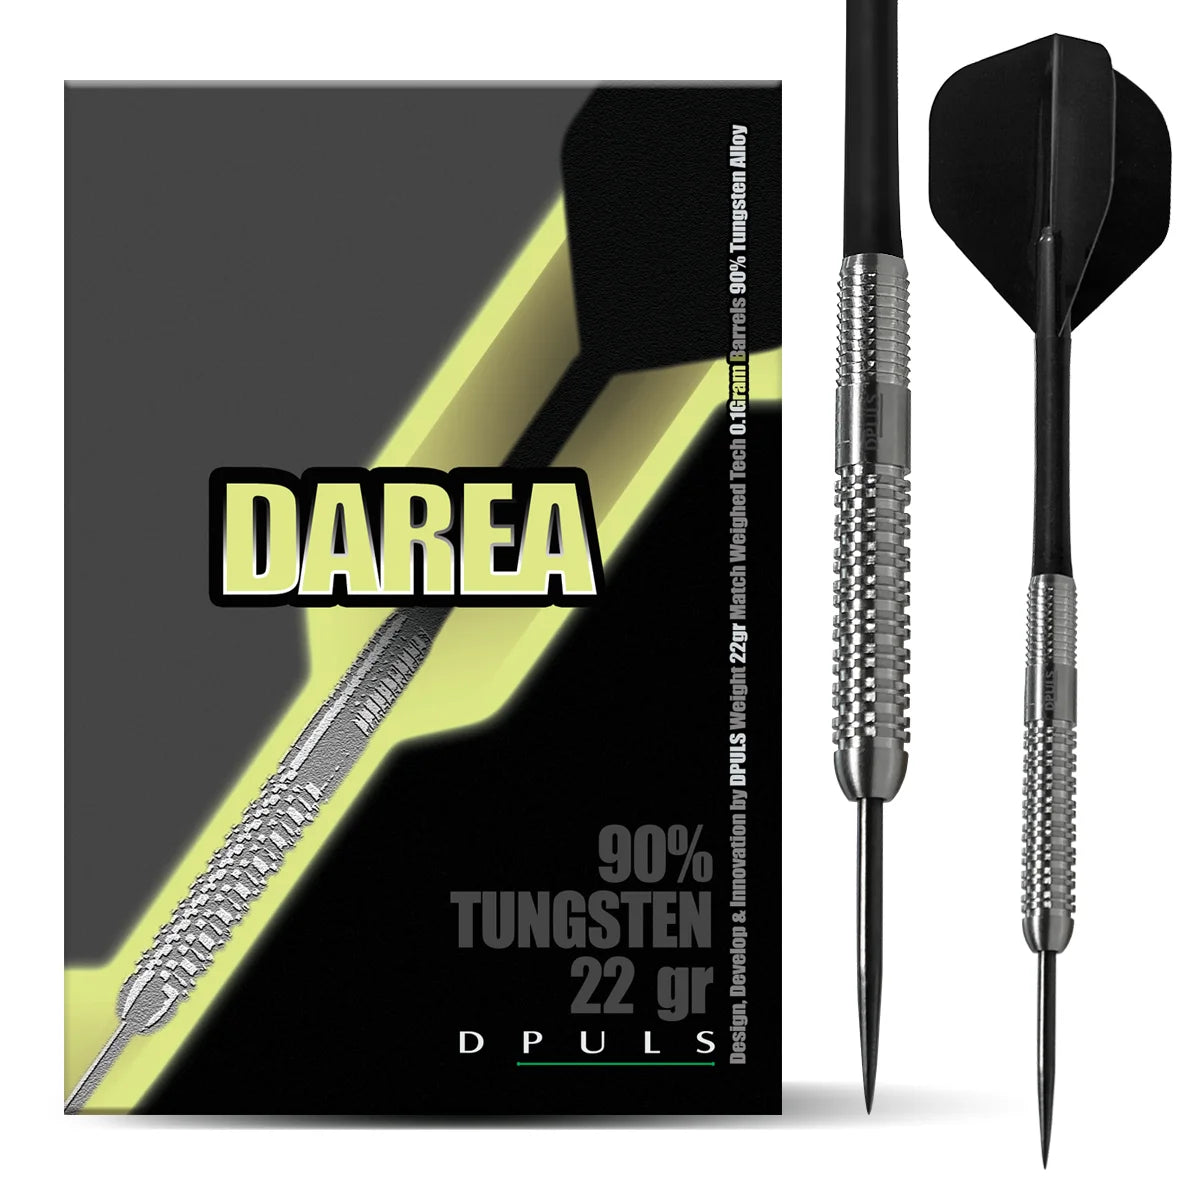 DPULS Darea Steel Darts 22g/90%